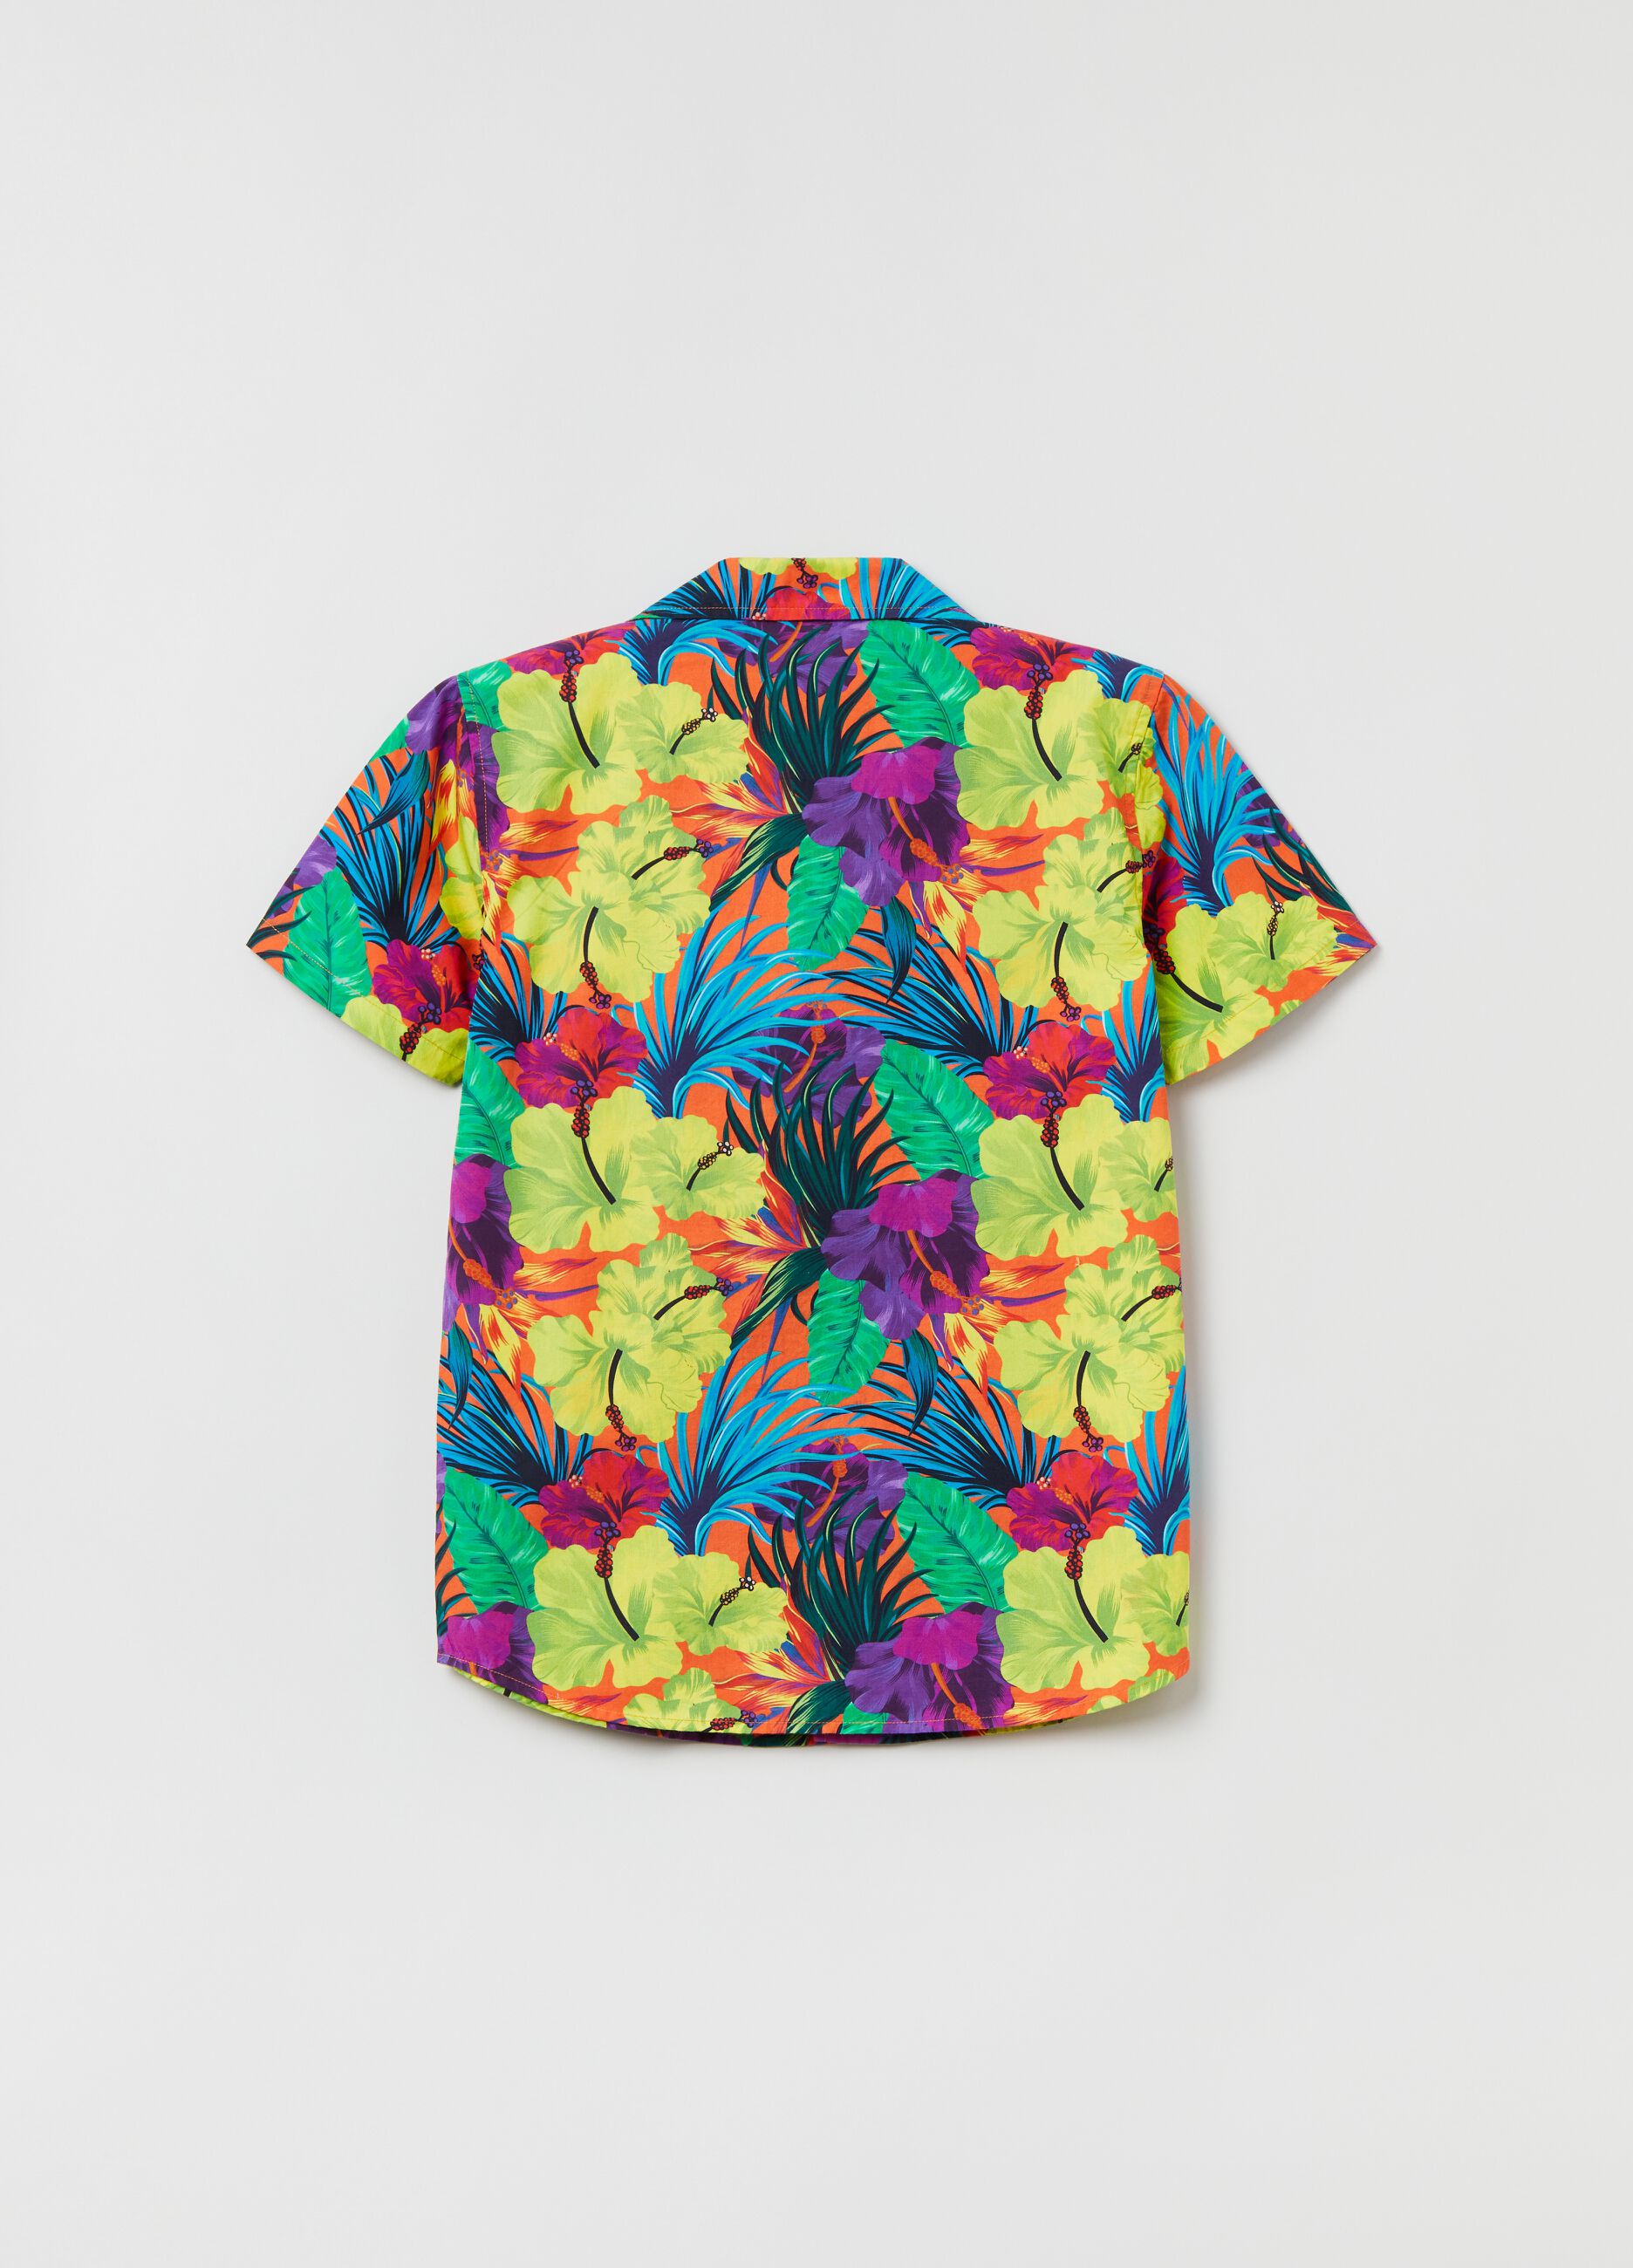 Maui and Sons cotton shirt